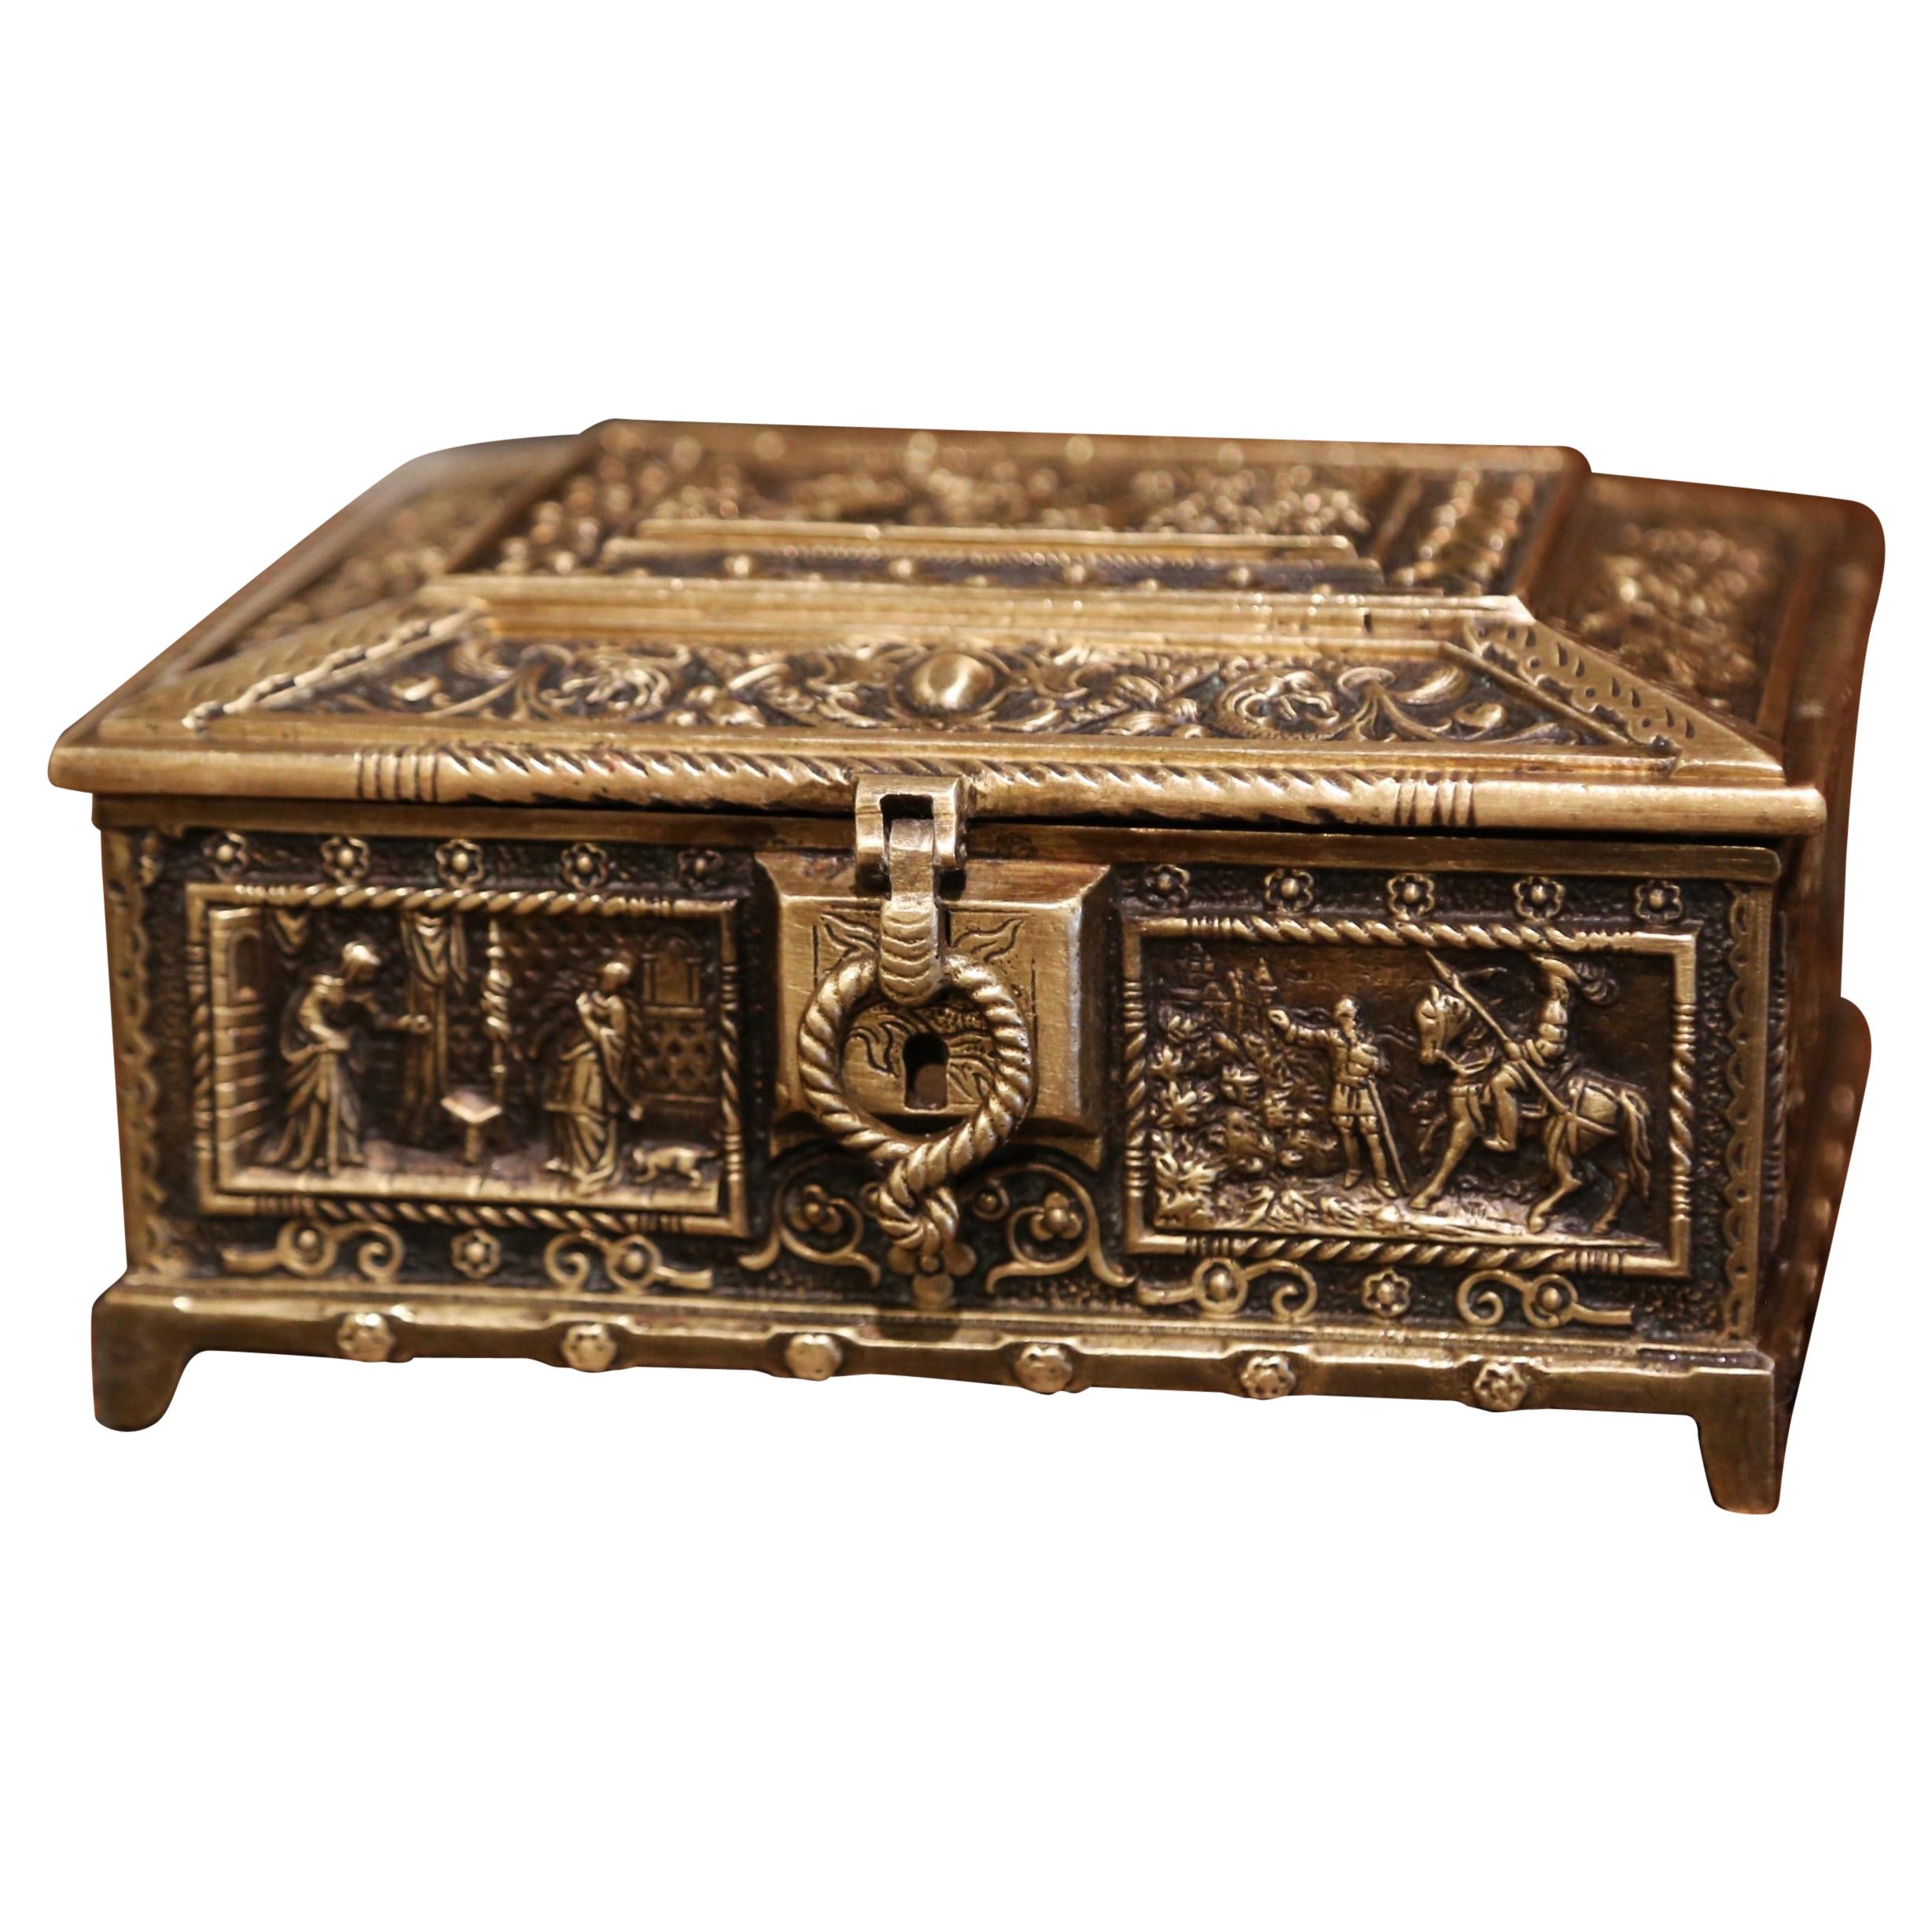 19th Century French Patinated Bronze Jewelry Box with Mythology Decor